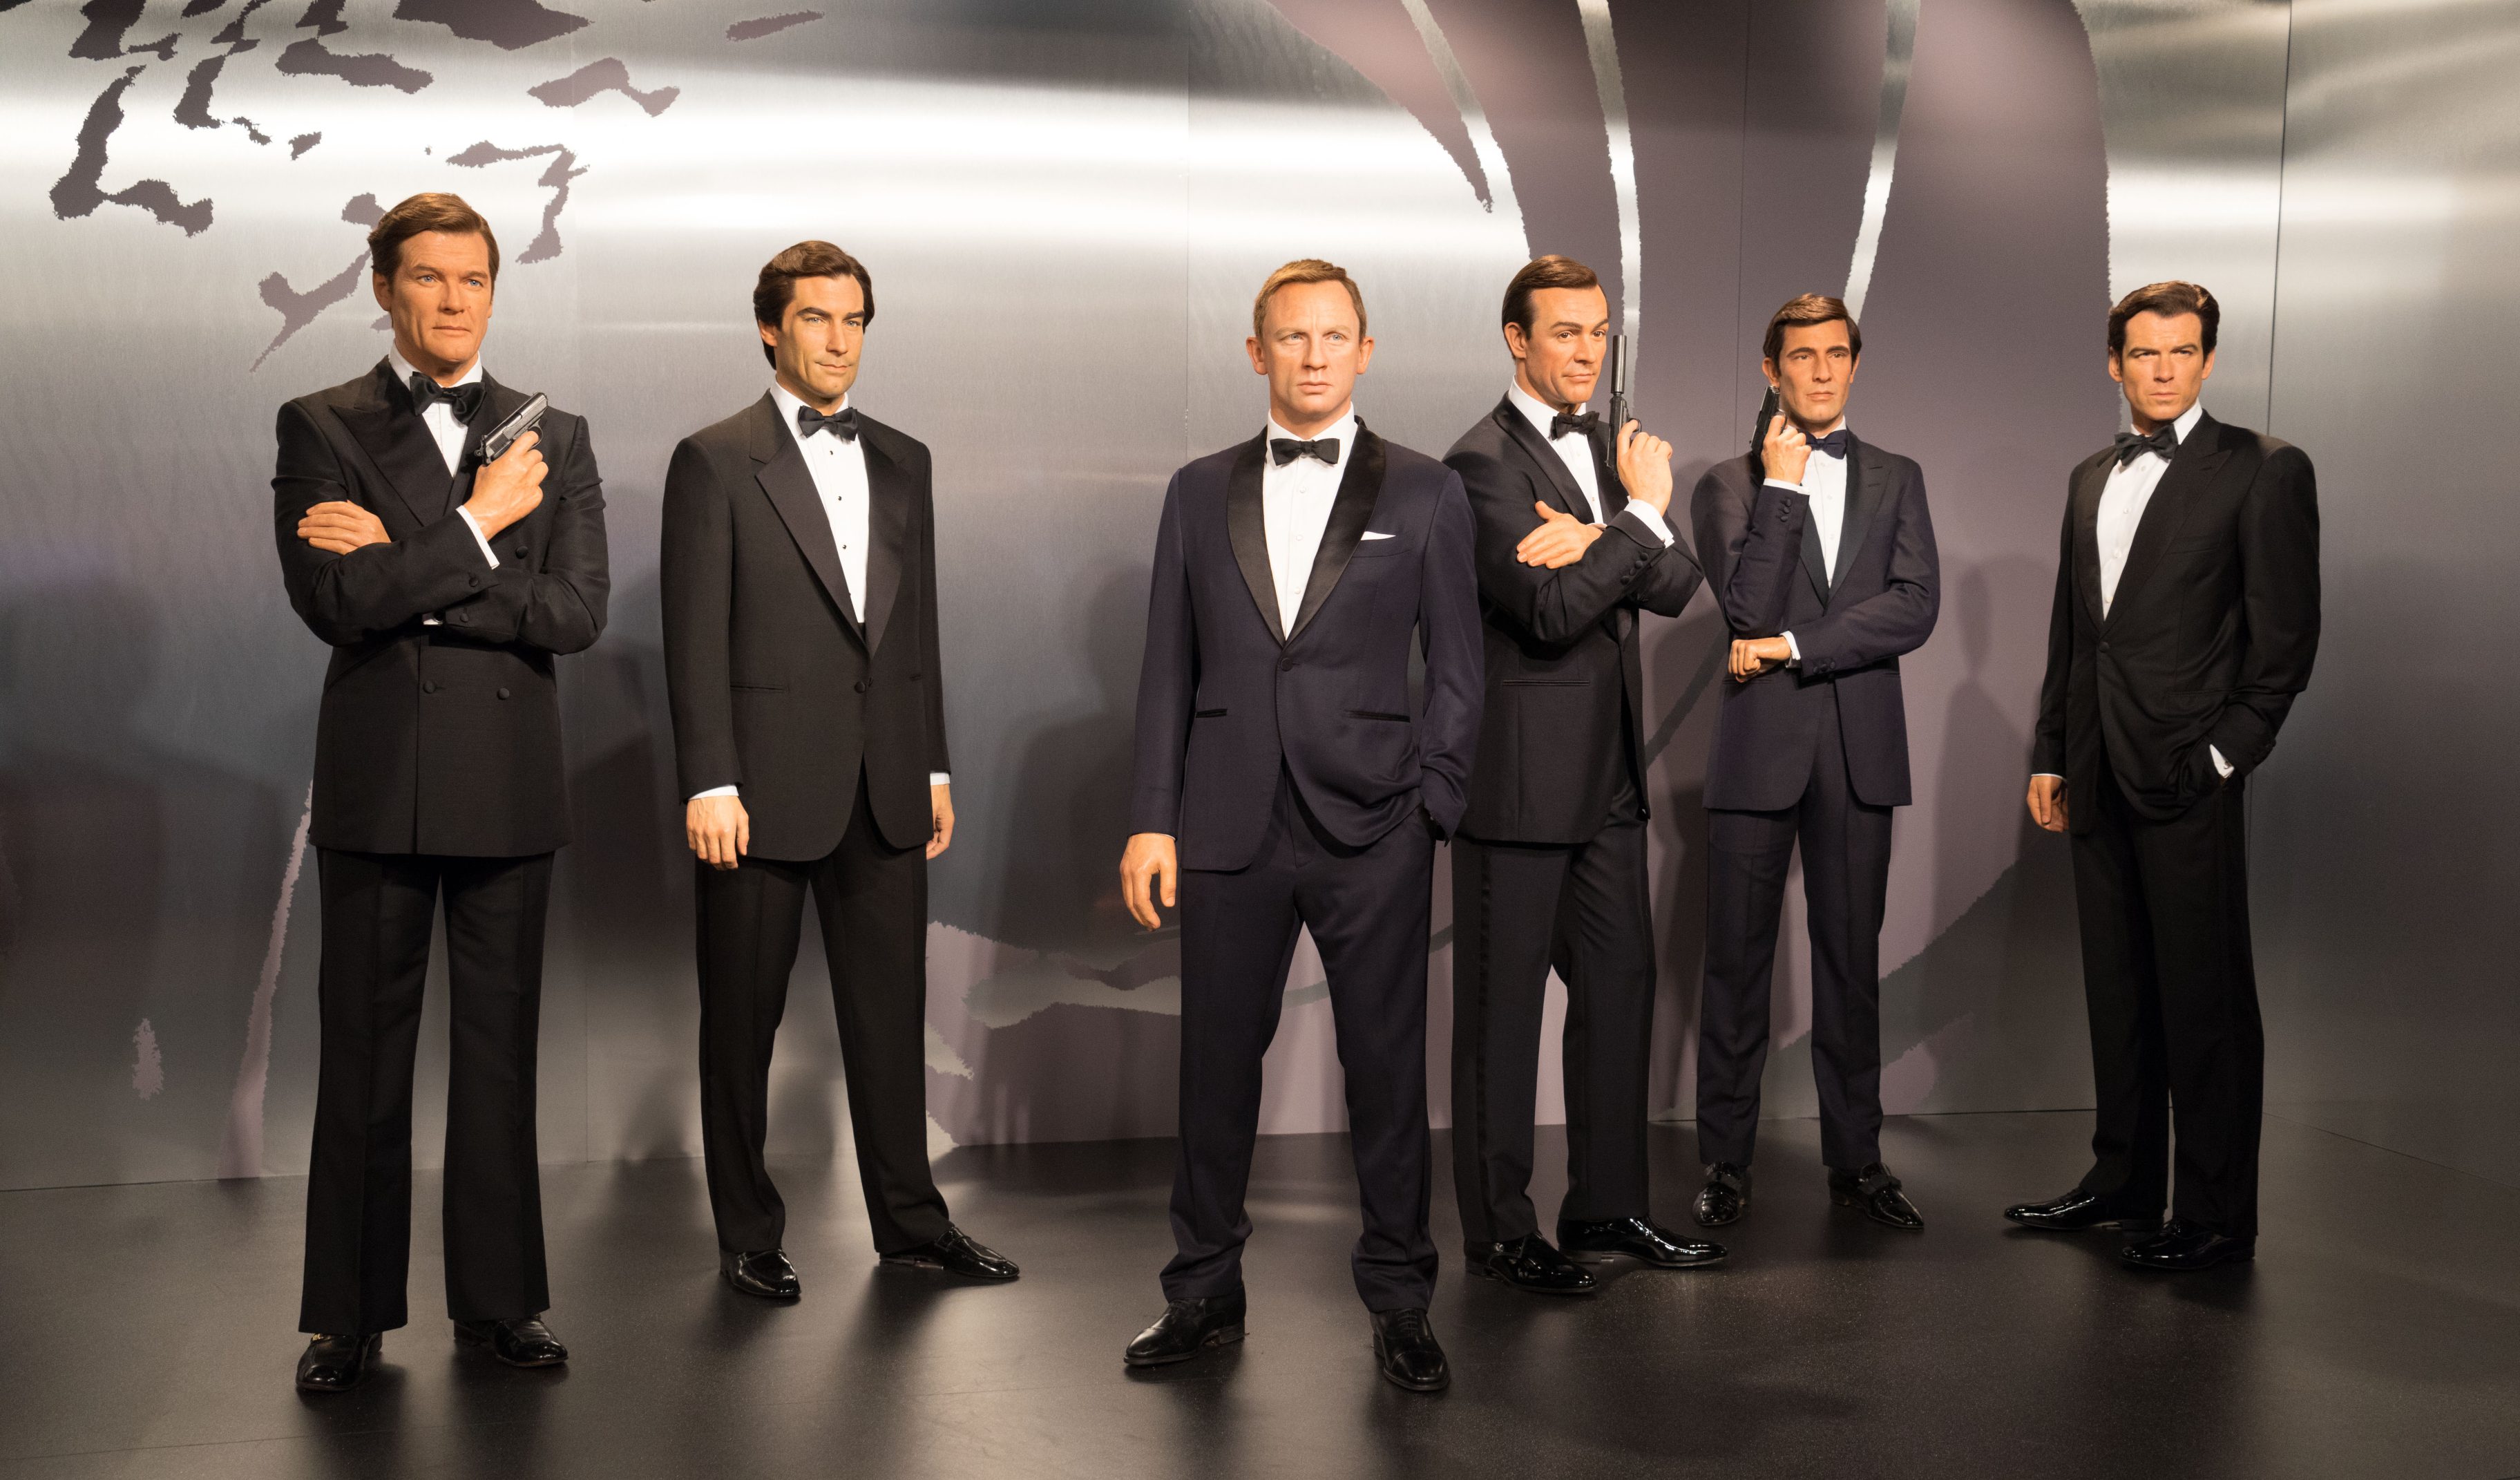 Daniel Craig's actual height in relation to other James Bond actors